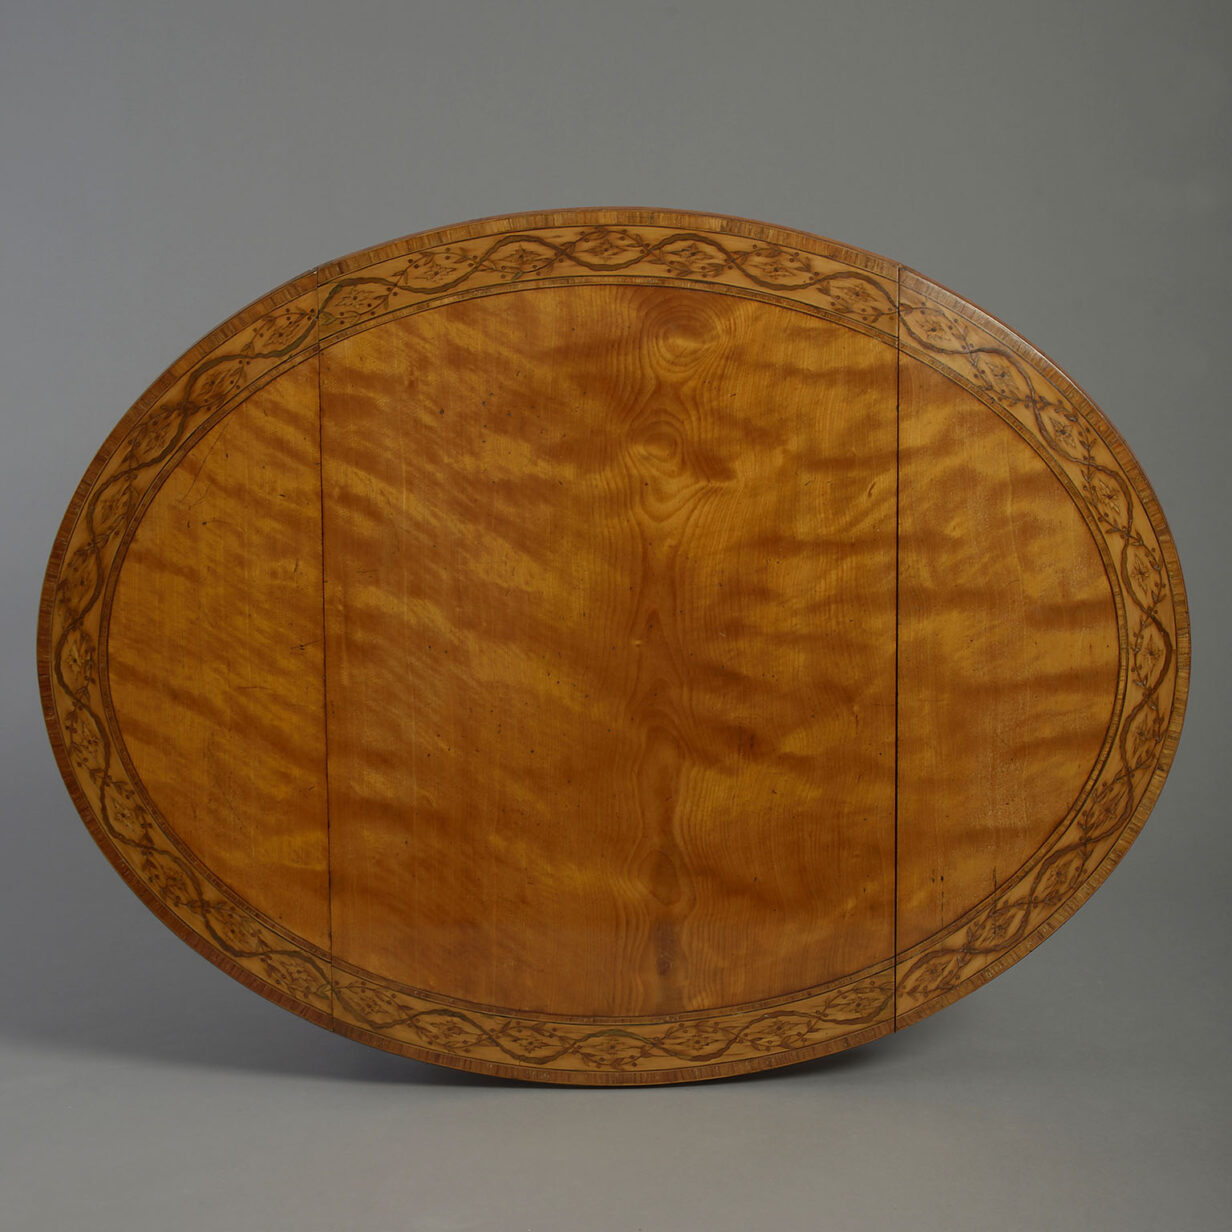 Fine 18th century george iii period inlaid satinwood pembroke table